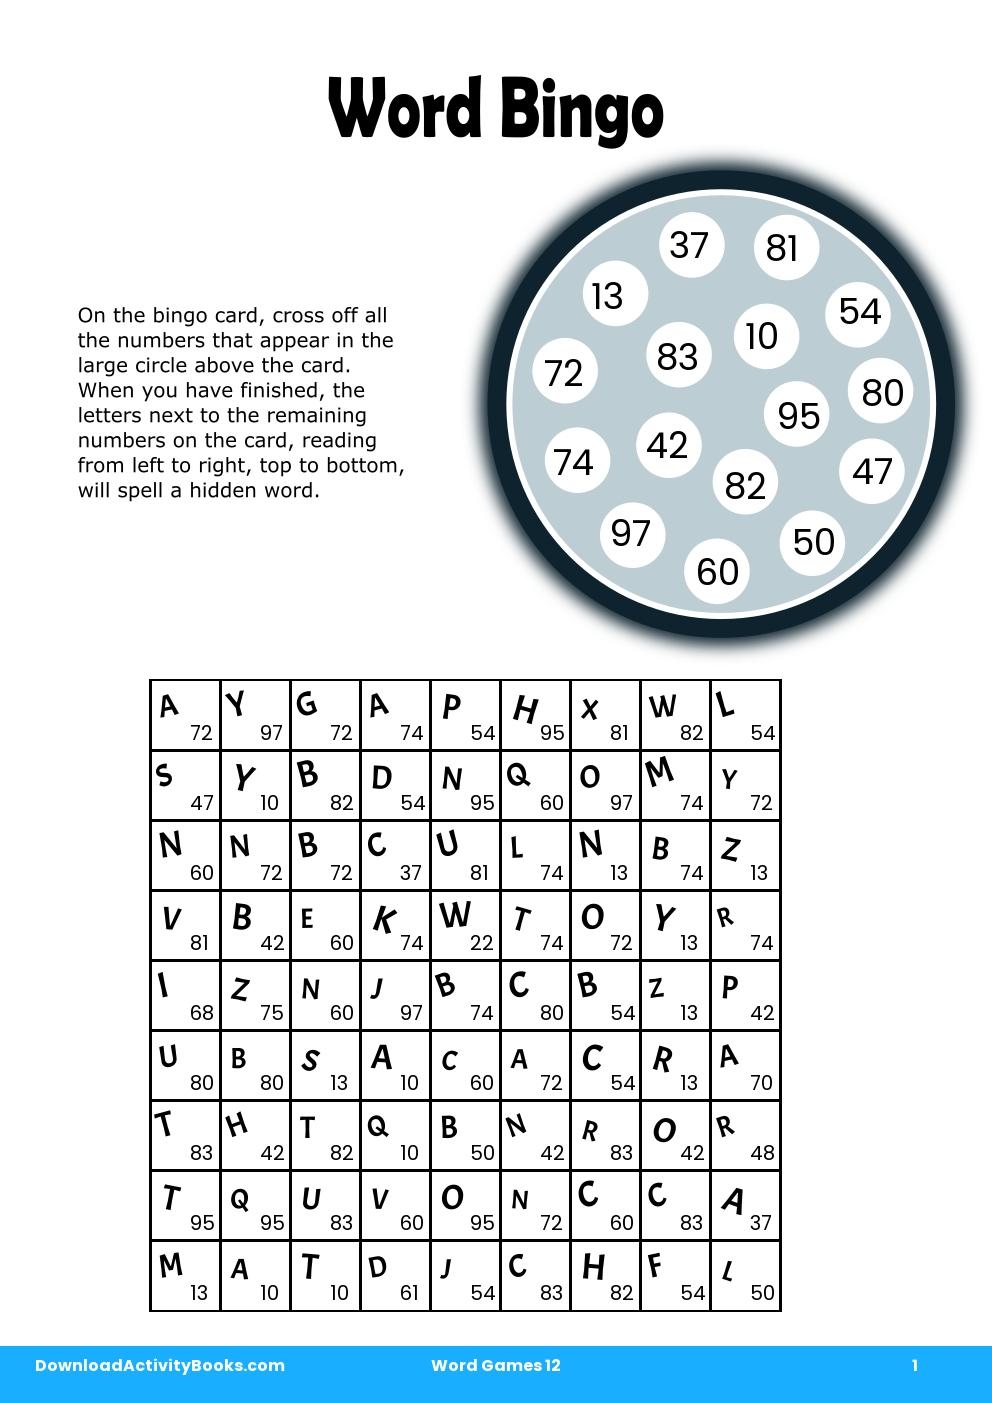 Word Bingo in Word Games 12